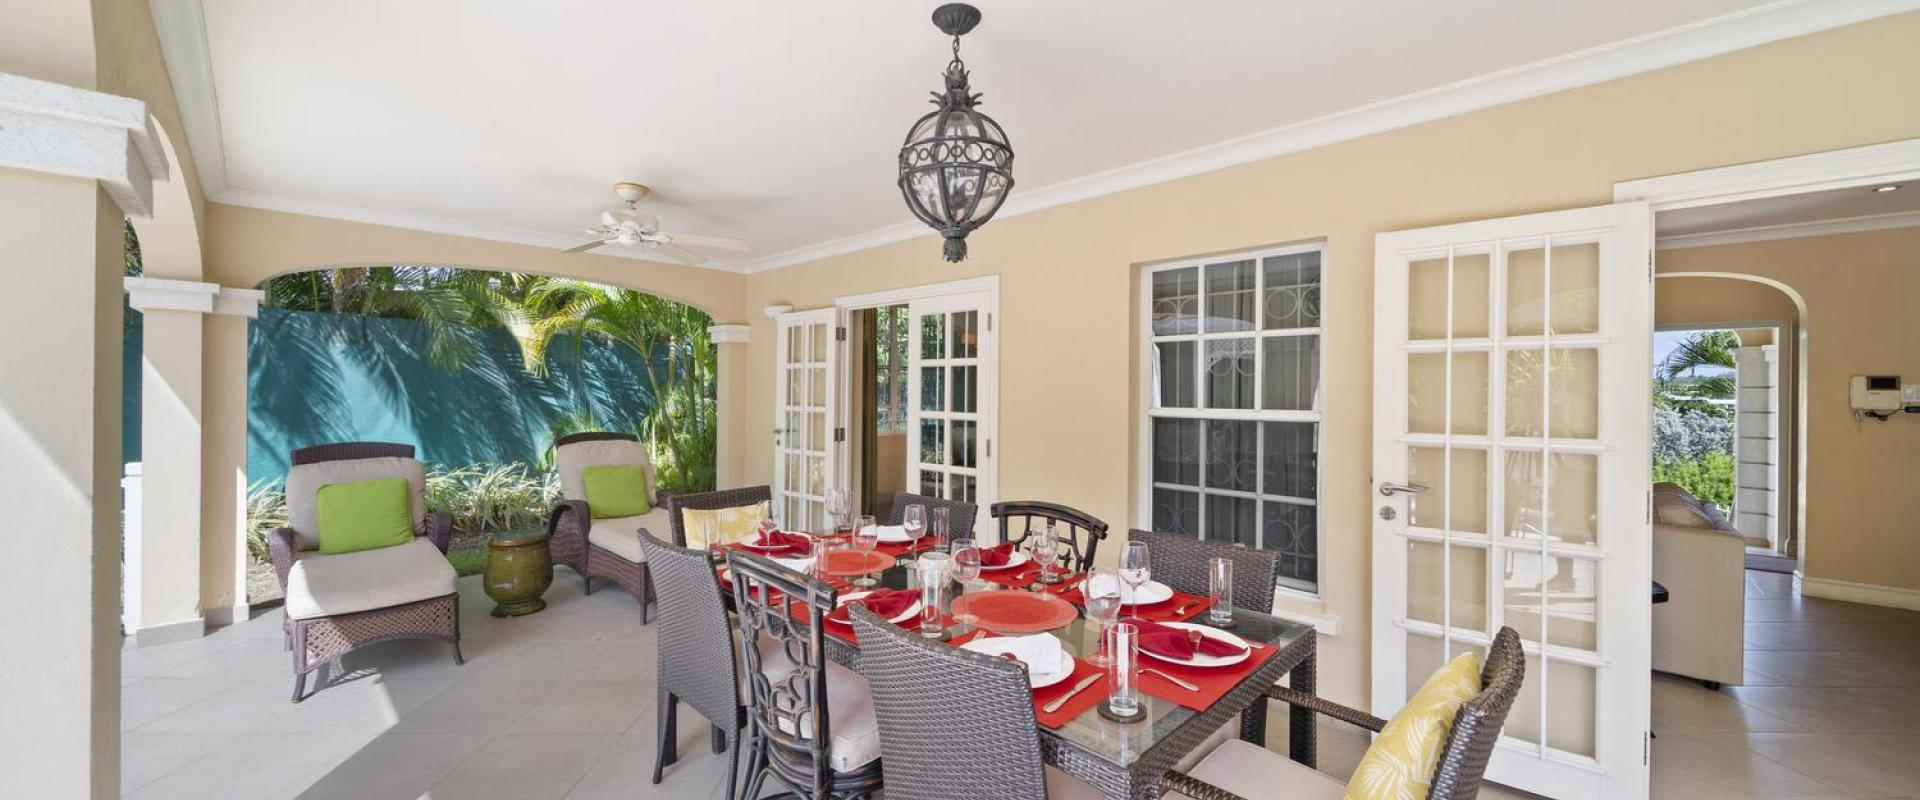 Tara Barbados 4 Bedroom Holiday Rental Villa Covered Patio and Dining Area